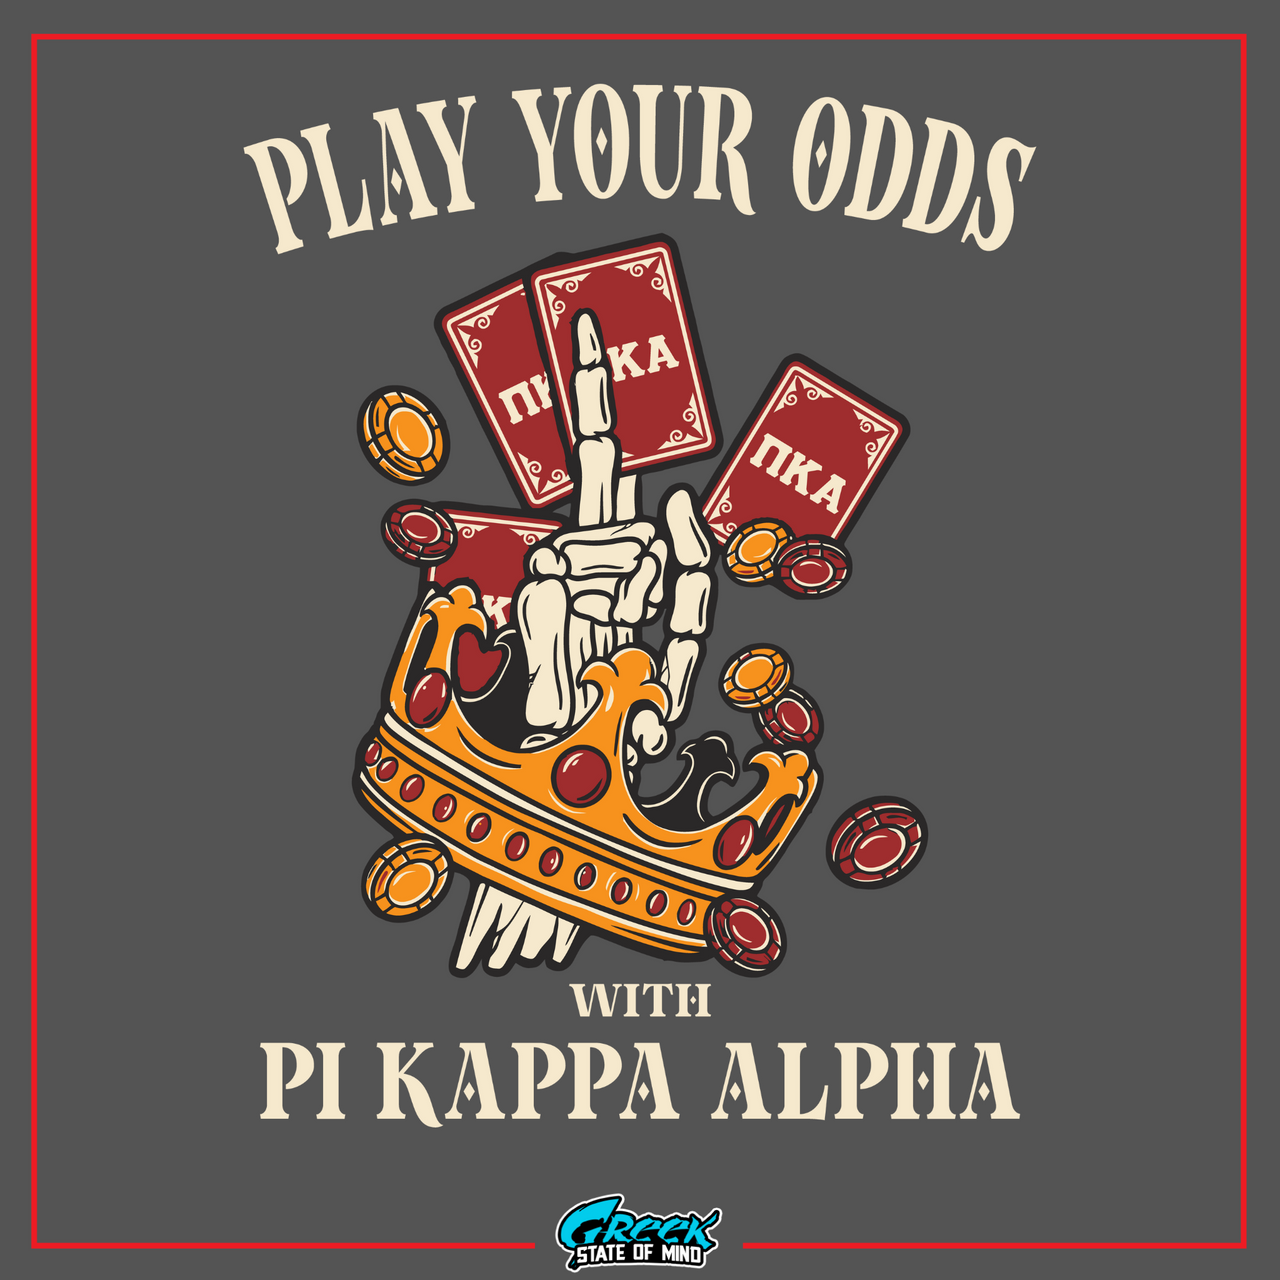 Pi Kappa Alpha Graphic Hoodie | Play Your Odds | Pi kappa alpha fraternity shirt design 